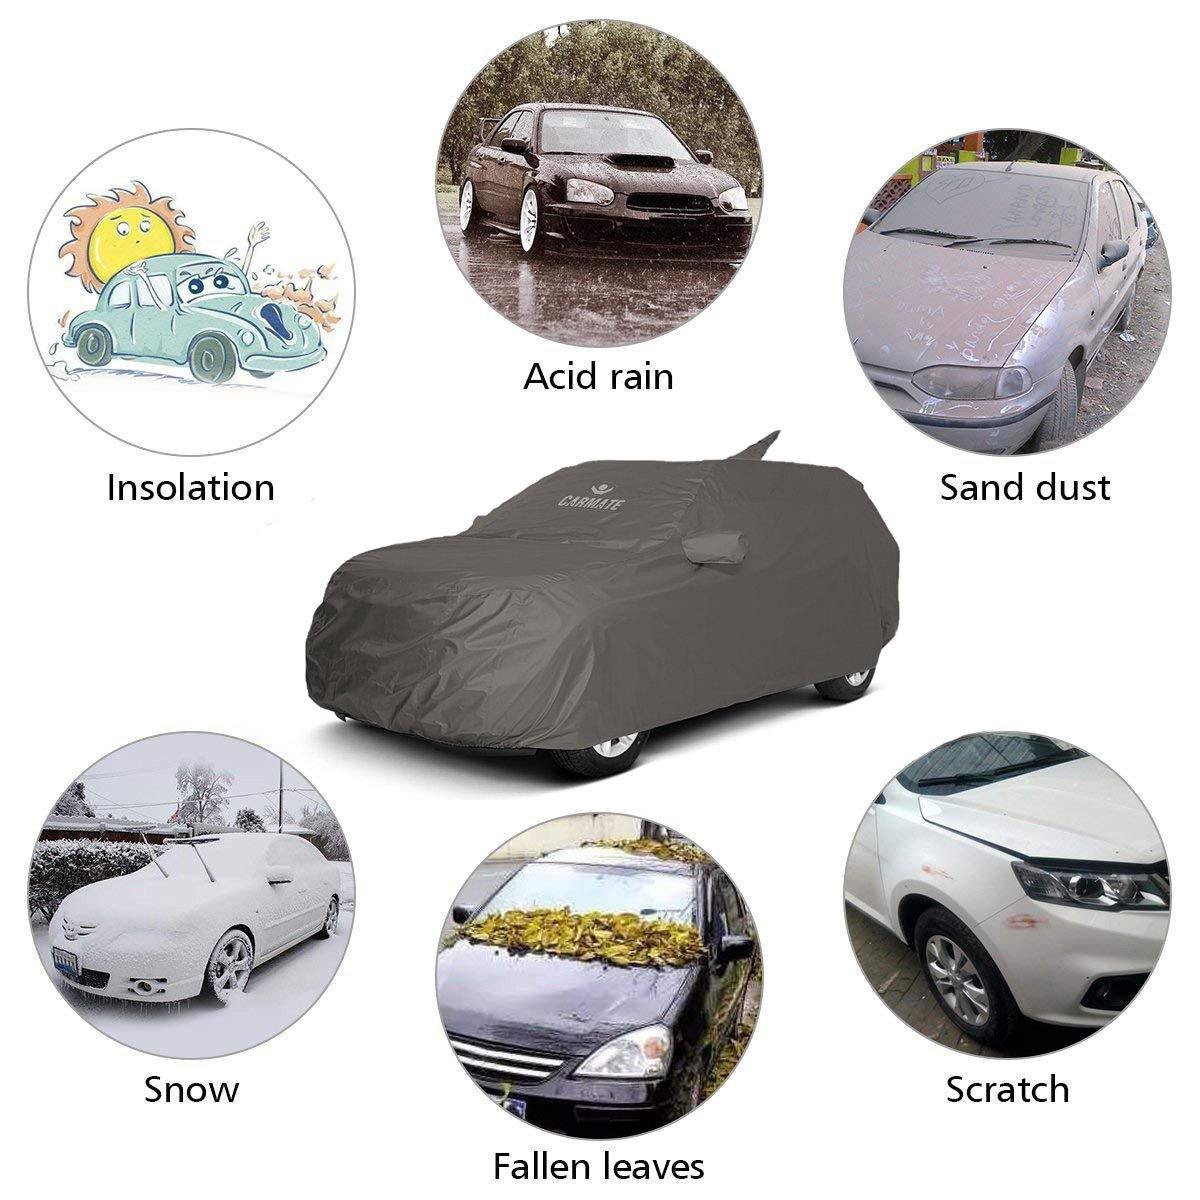 Carmate Car Body Cover 100% Waterproof Pride (Grey) for Audi - A8 - CARMATE®